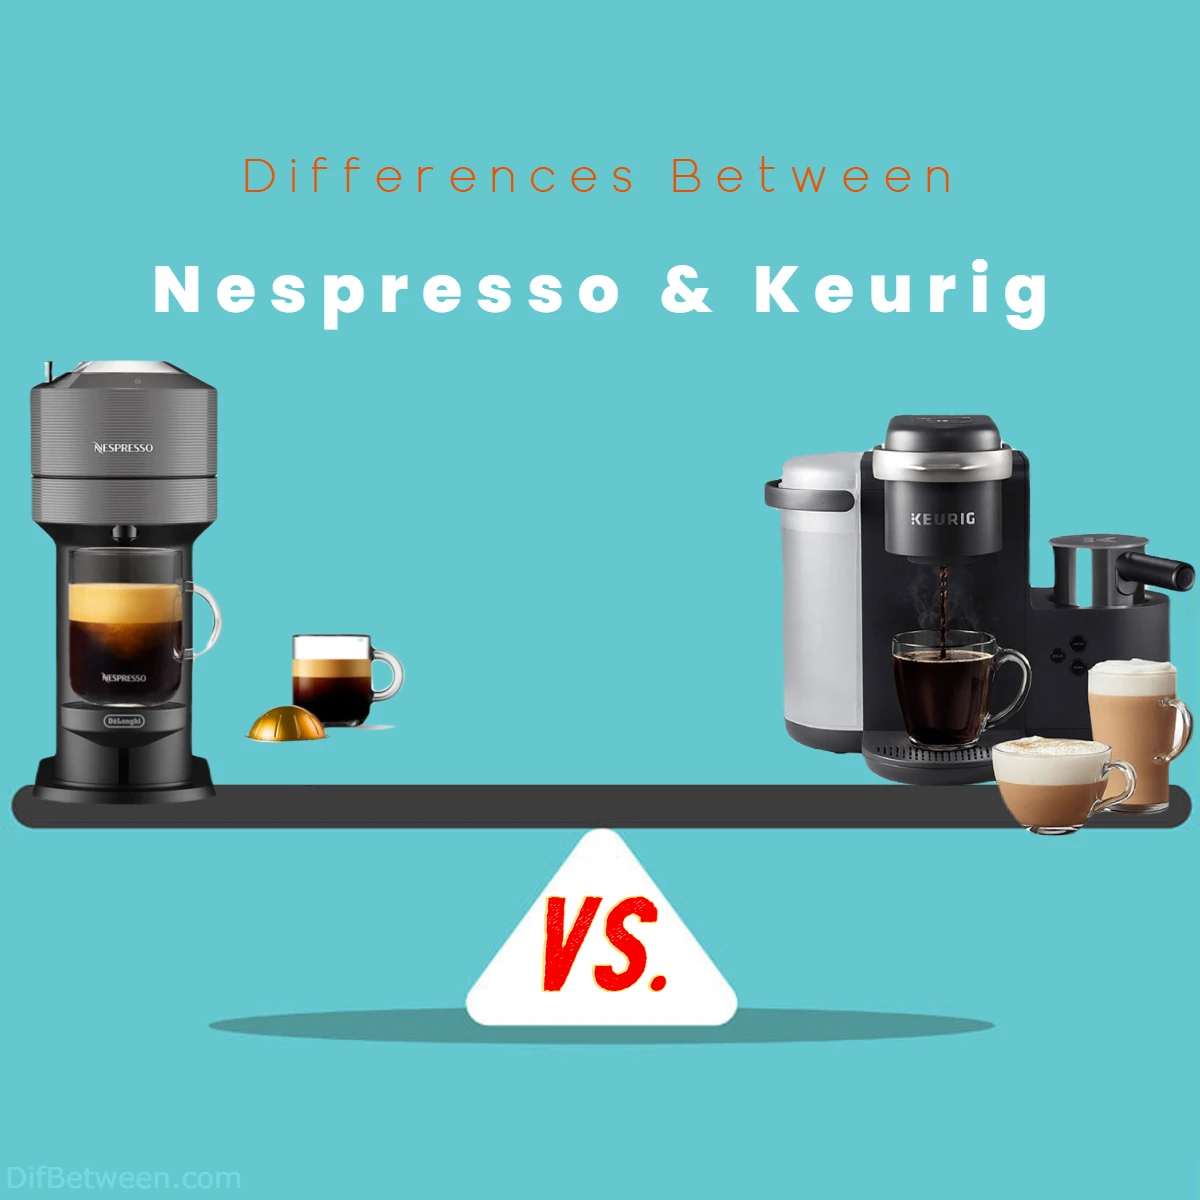 Differences Between Keurig and Nespresso